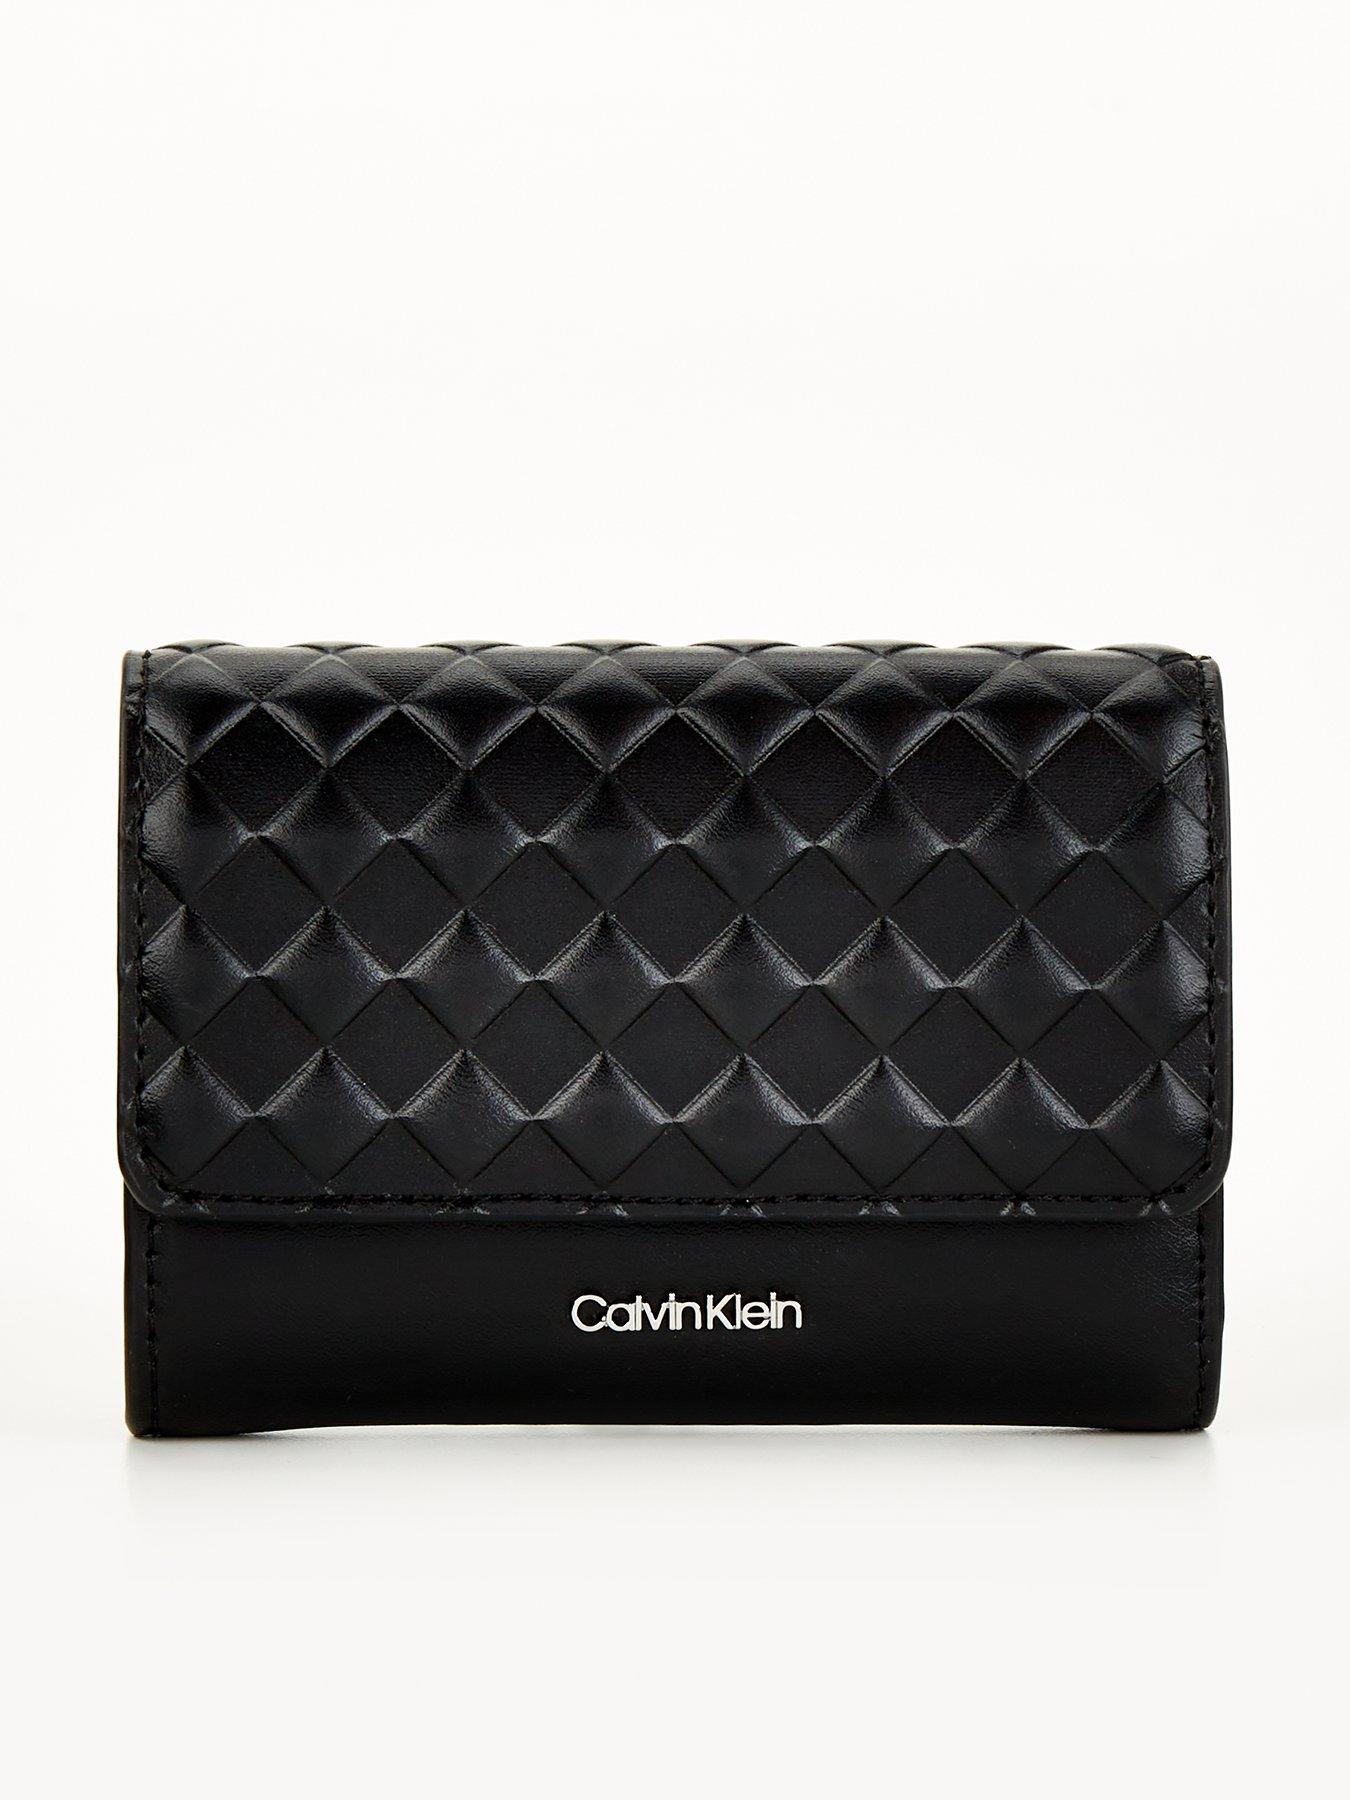 Calvin Klein Multicolor Shoulder Bags for Women | Mercari